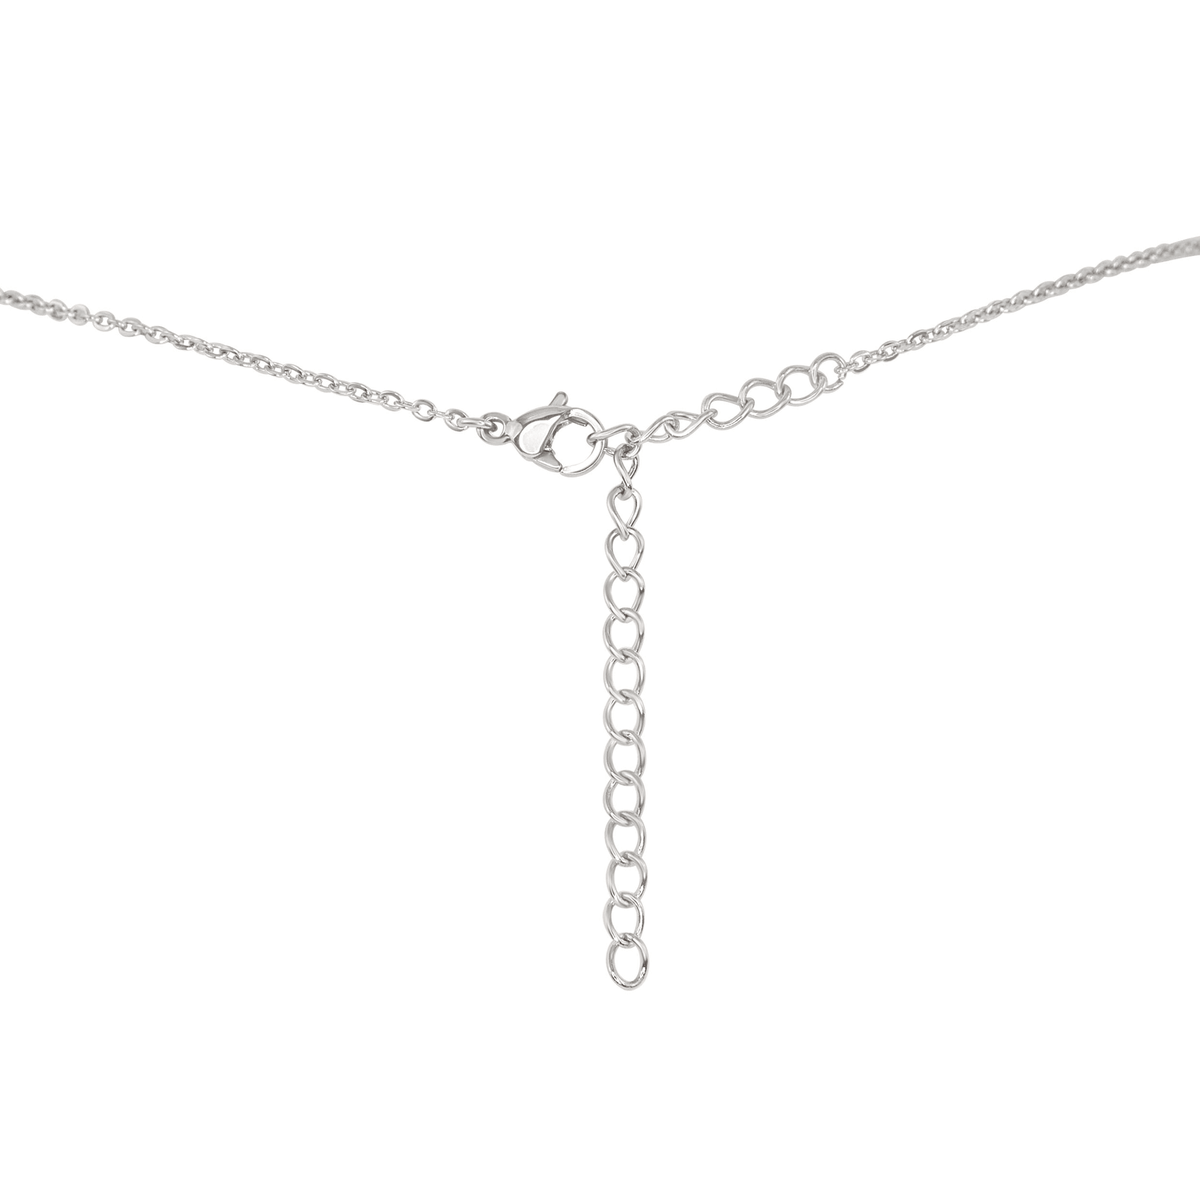 Tiny Raw Smoky Quartz Pendant Necklace - Tiny Raw Smoky Quartz Pendant Necklace - Sterling Silver / Cable - Luna Tide Handmade Crystal Jewellery